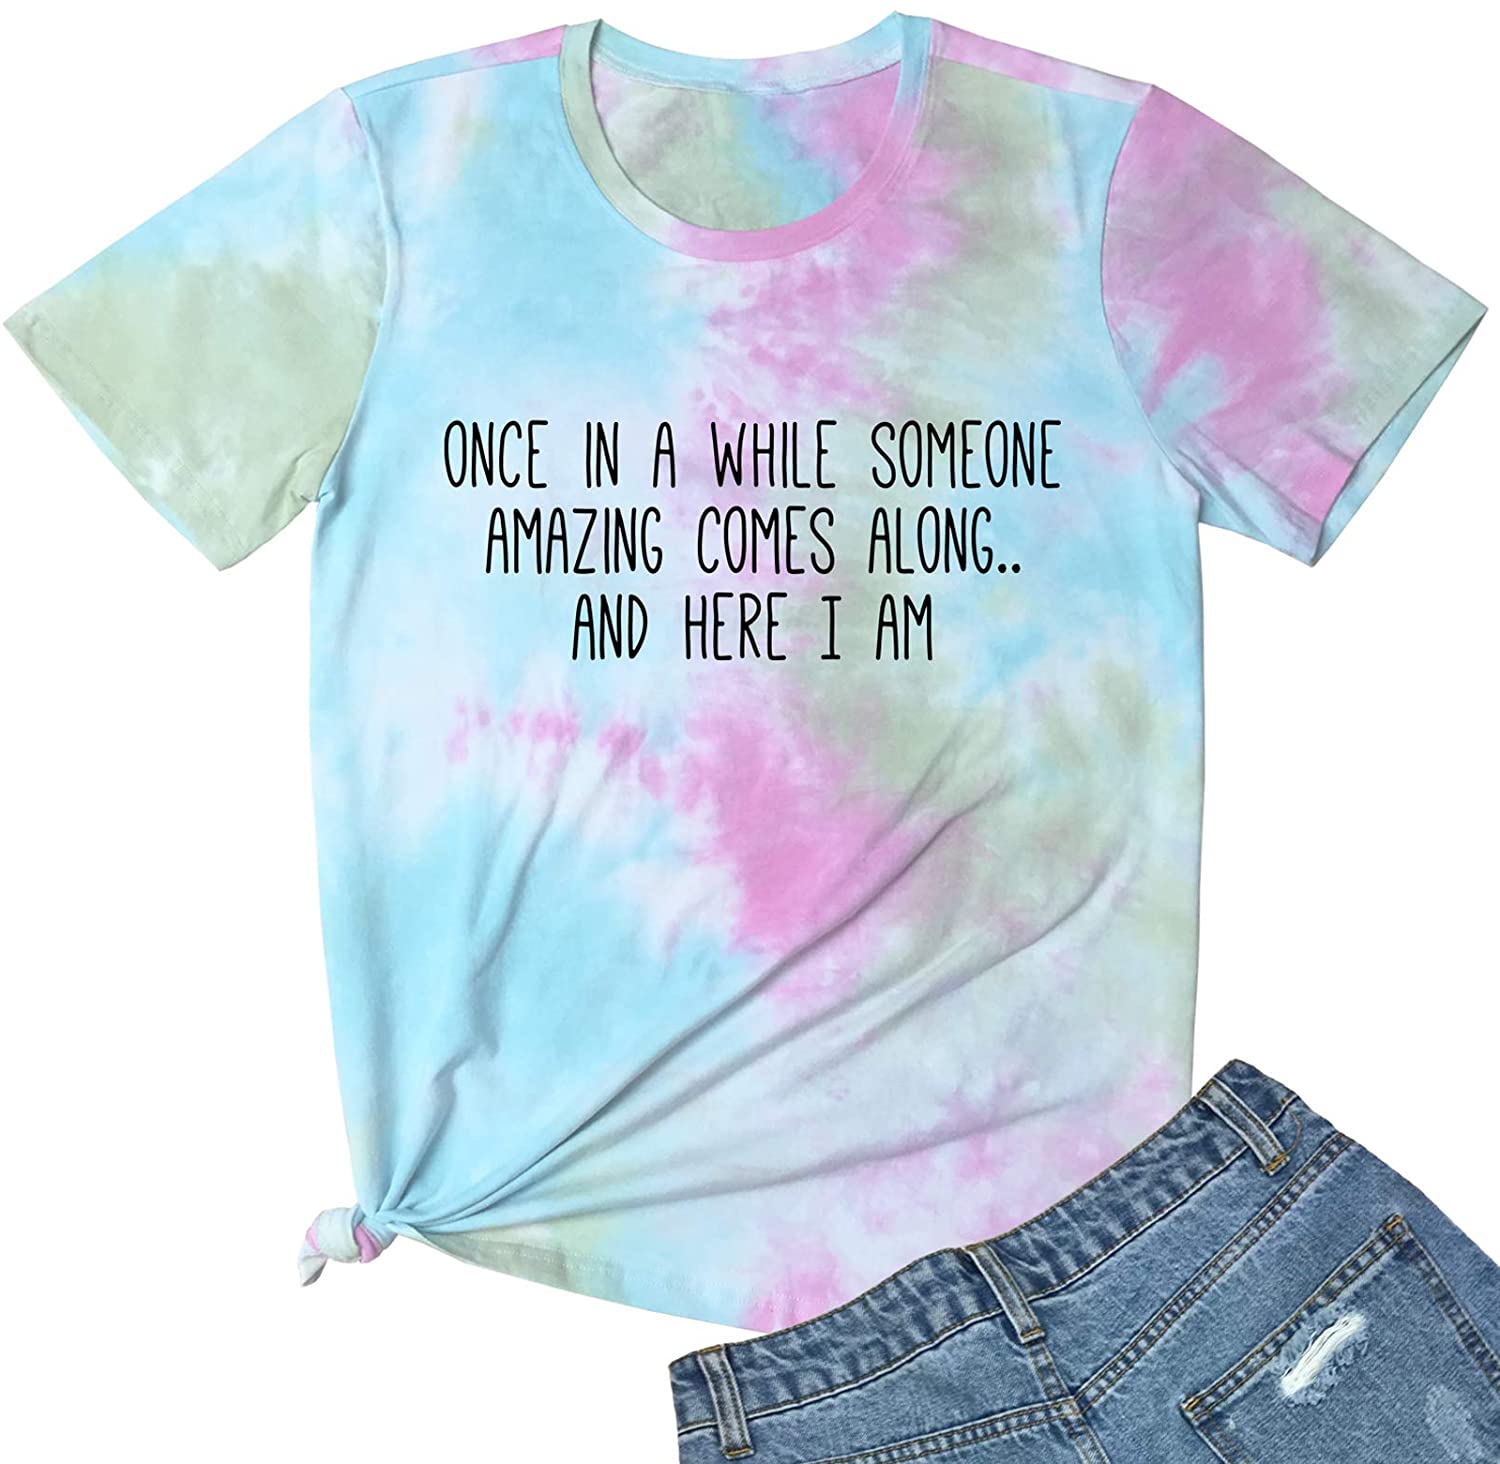  BLACKMYTH Women's Cute Graphic T Shirts Funny Tops